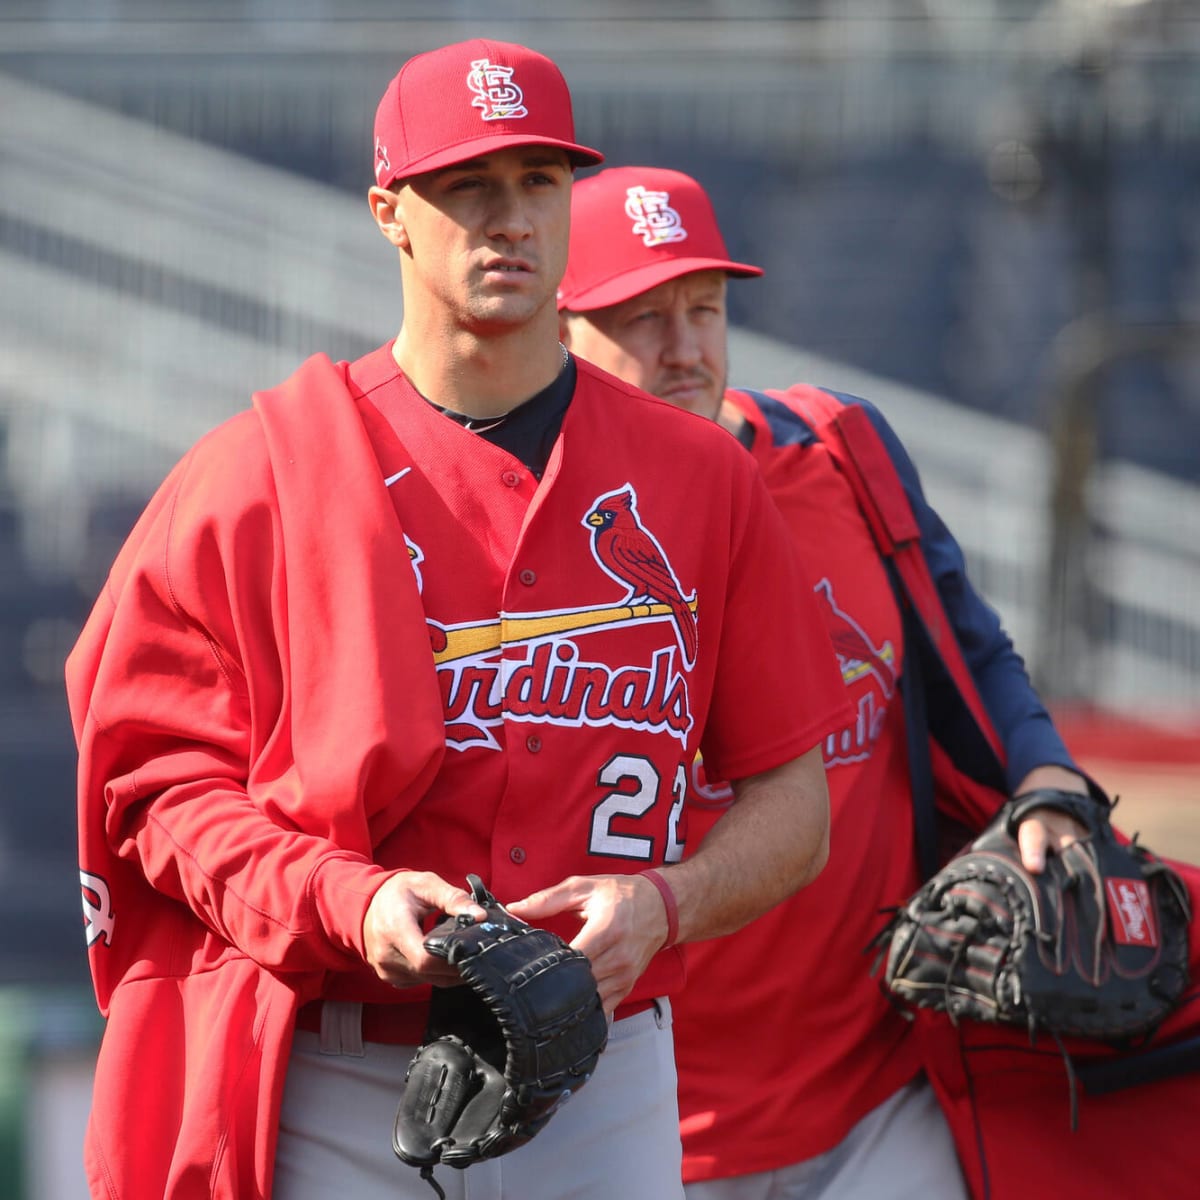 Absolute joke” - MLB pitcher Jack Flaherty targets Tampa Bay Rays